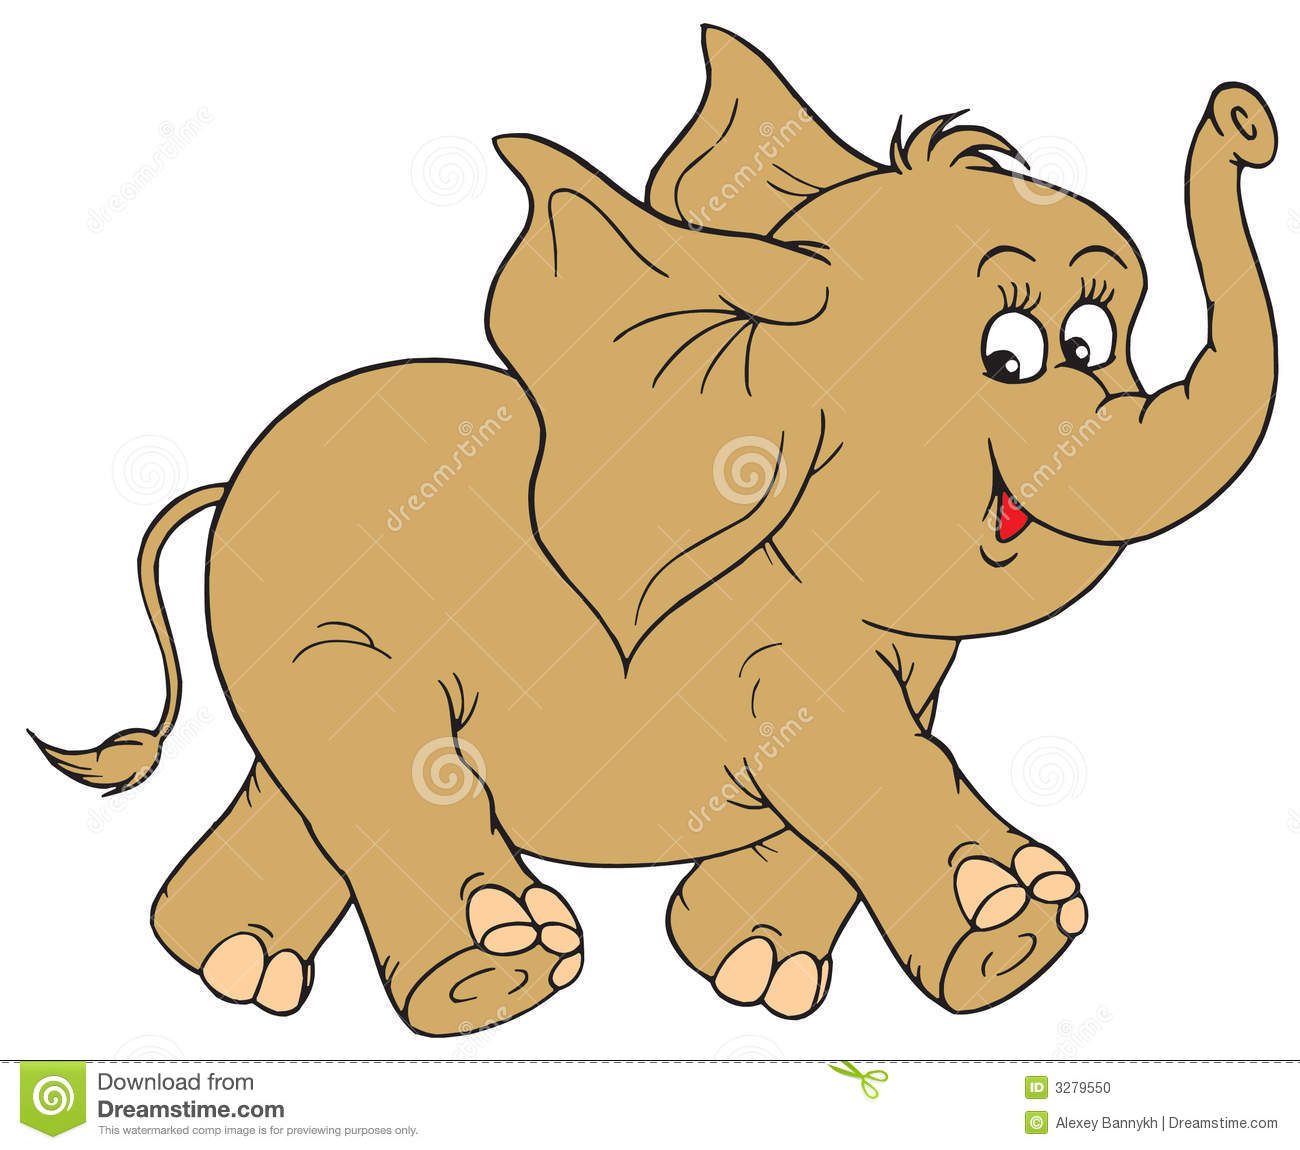 Cute elephant clipart elephant image clipart